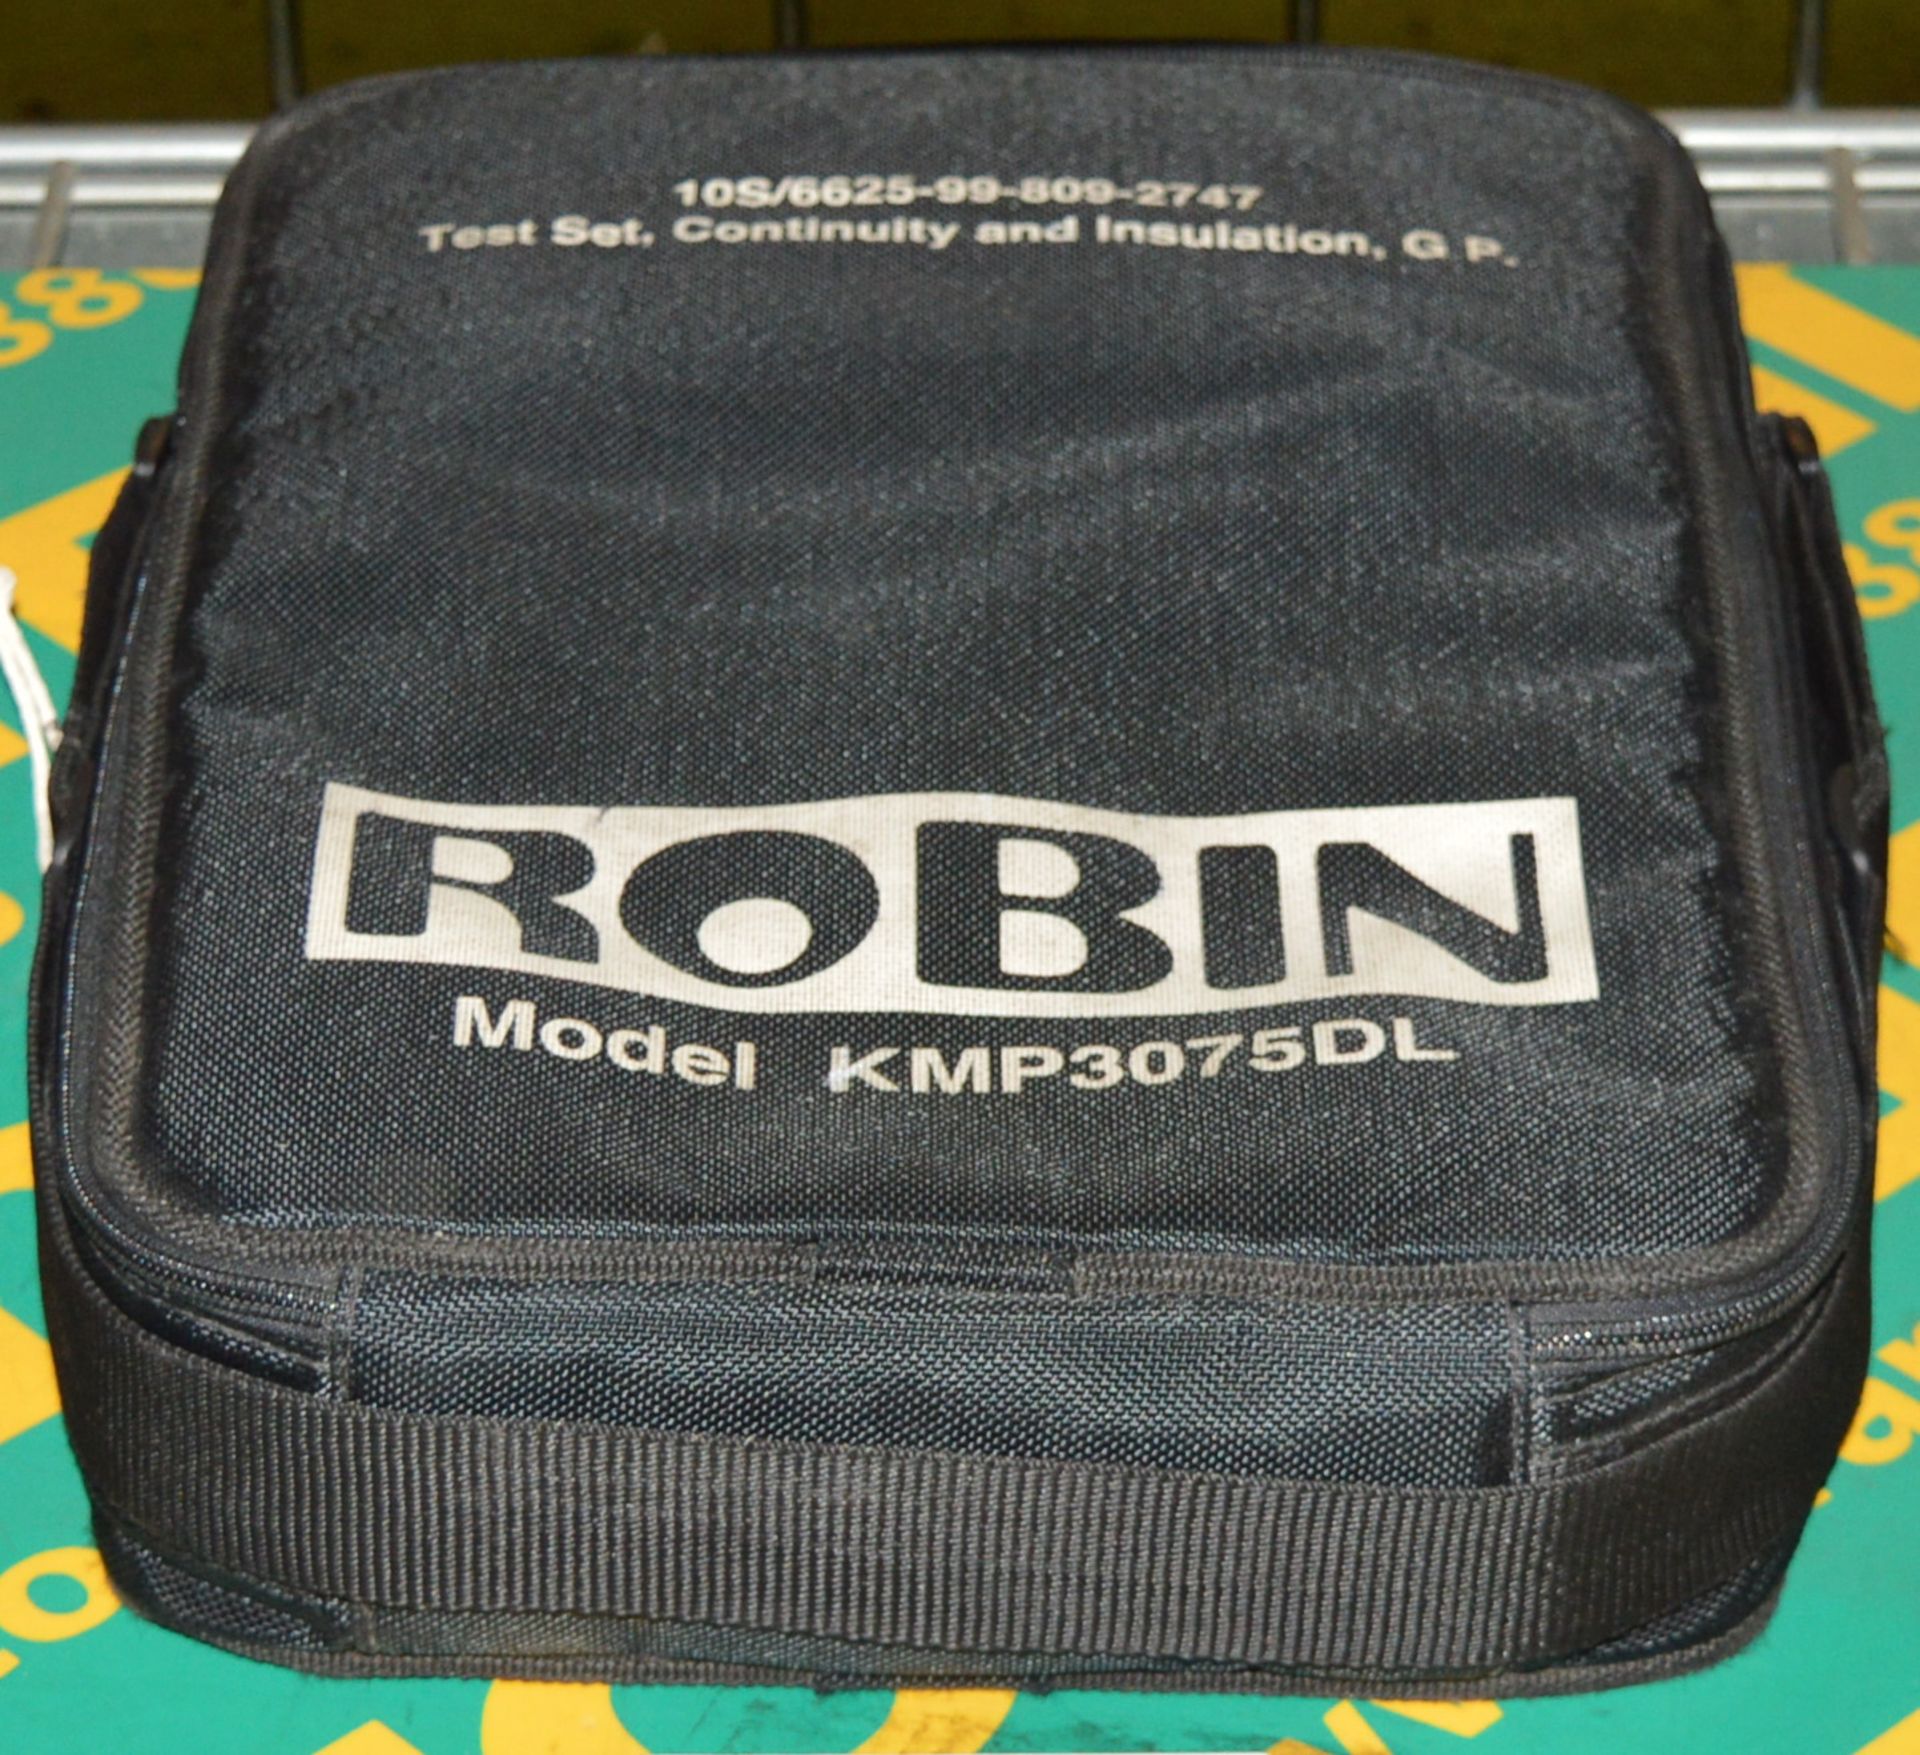 Robin 10S/6625-99-809-2747 Continuity Test Set - Bild 2 aus 2